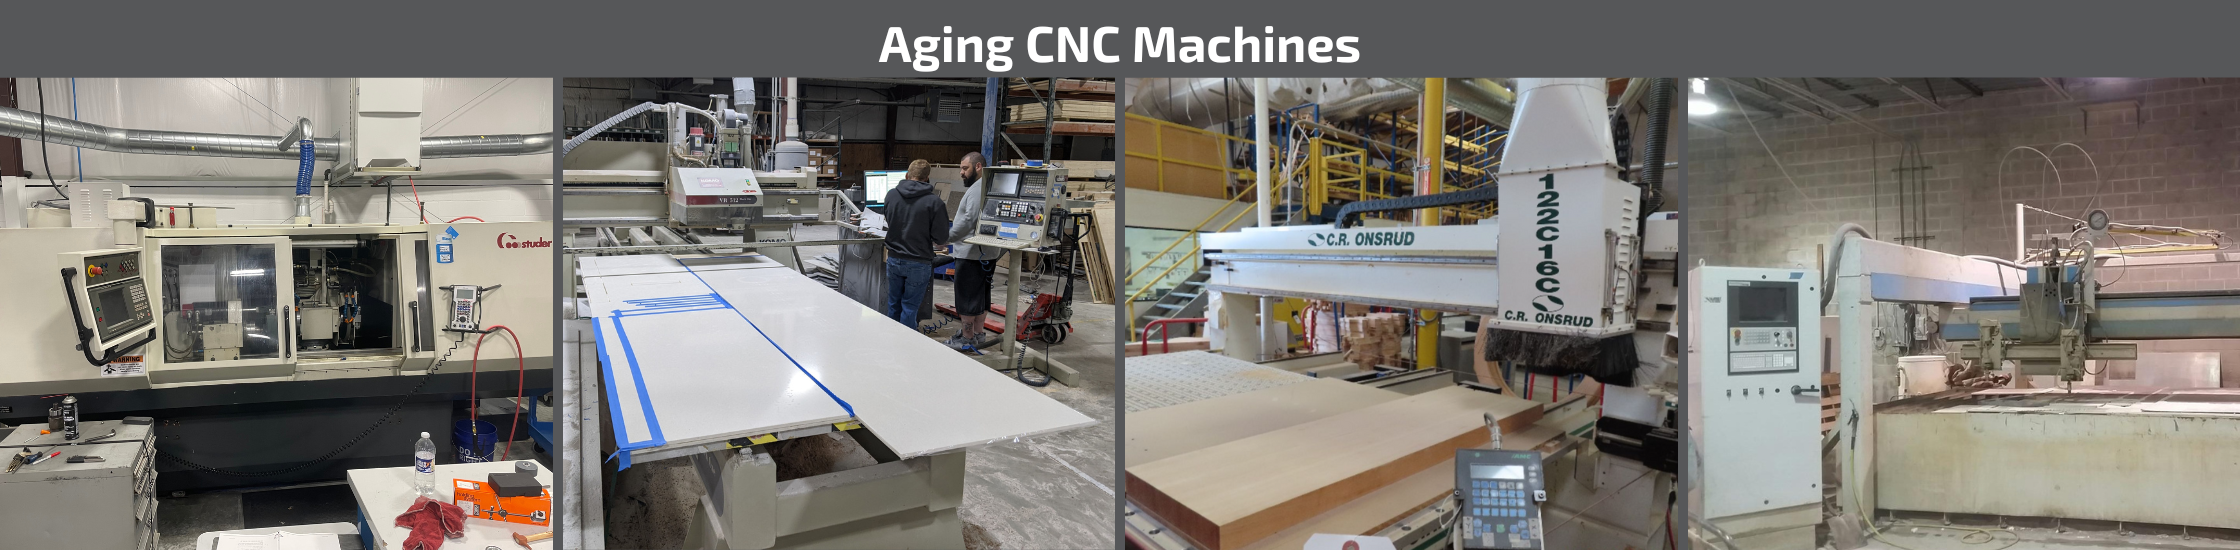 Aging CNC Machines